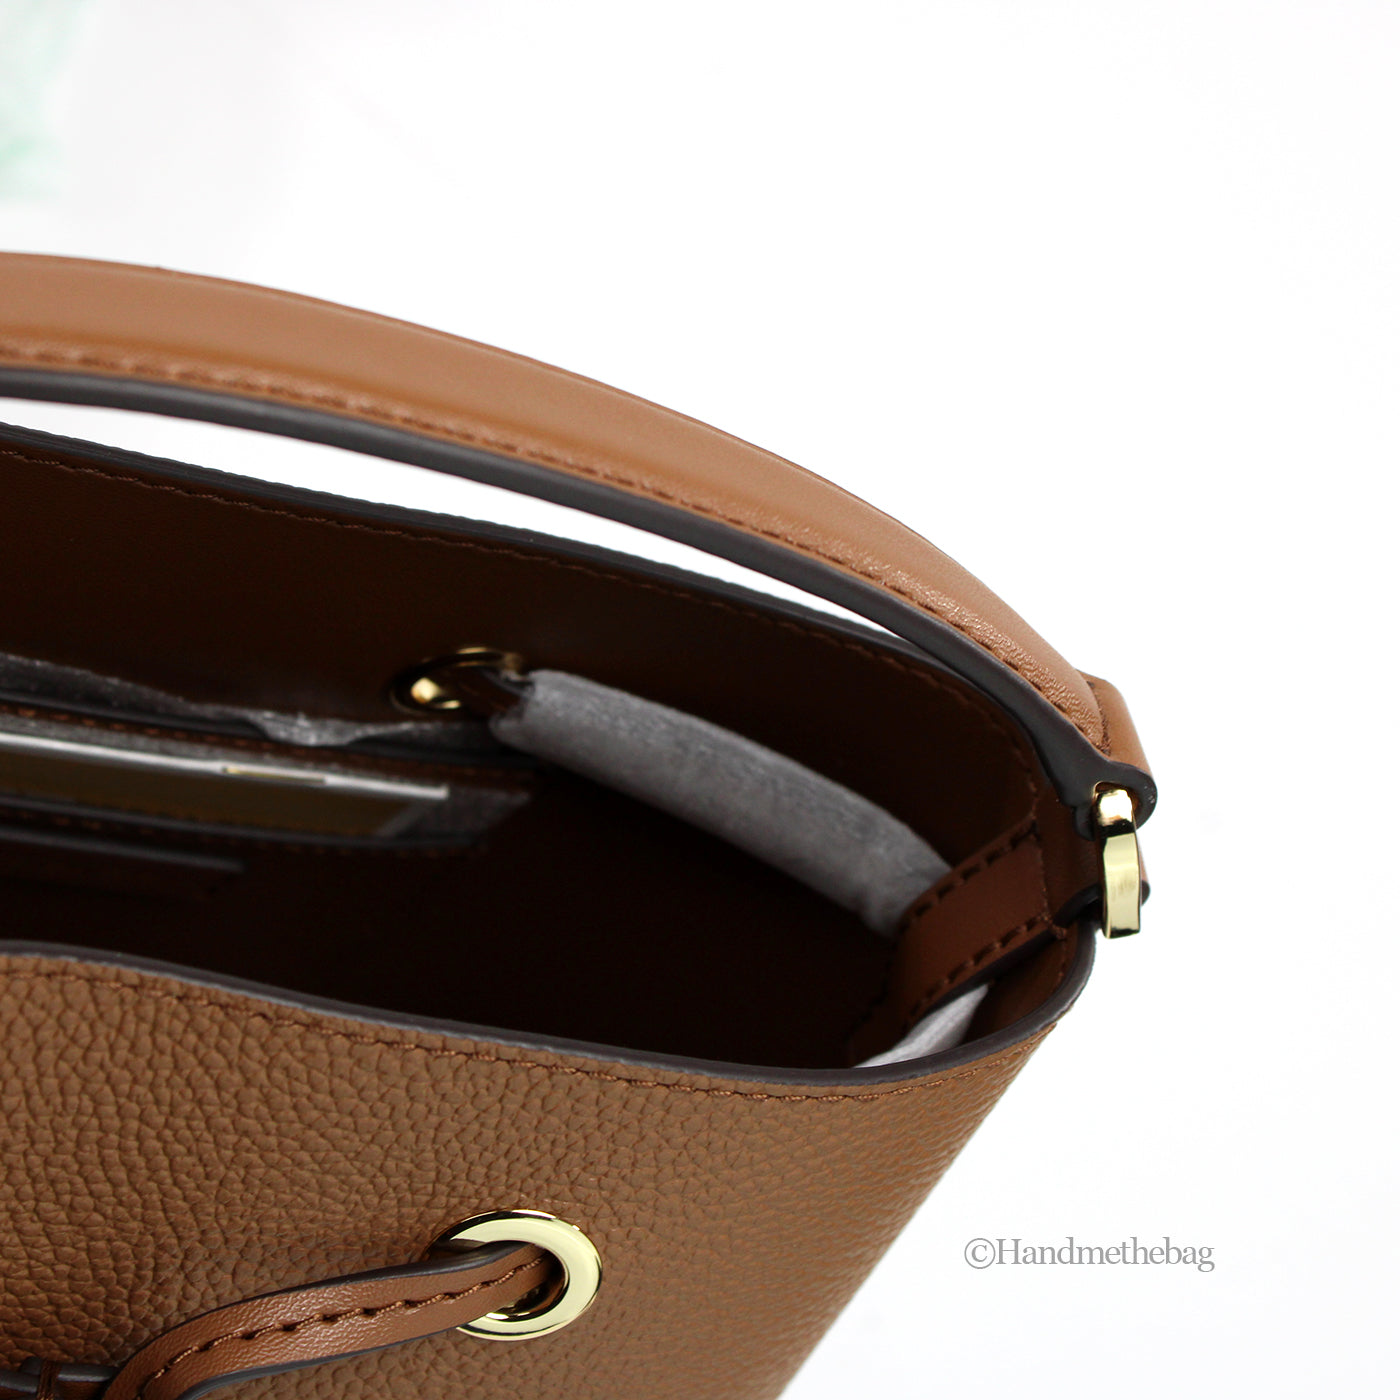 Michael Kors Mercer Small Luggage Leather Bucket Crossbody Bag